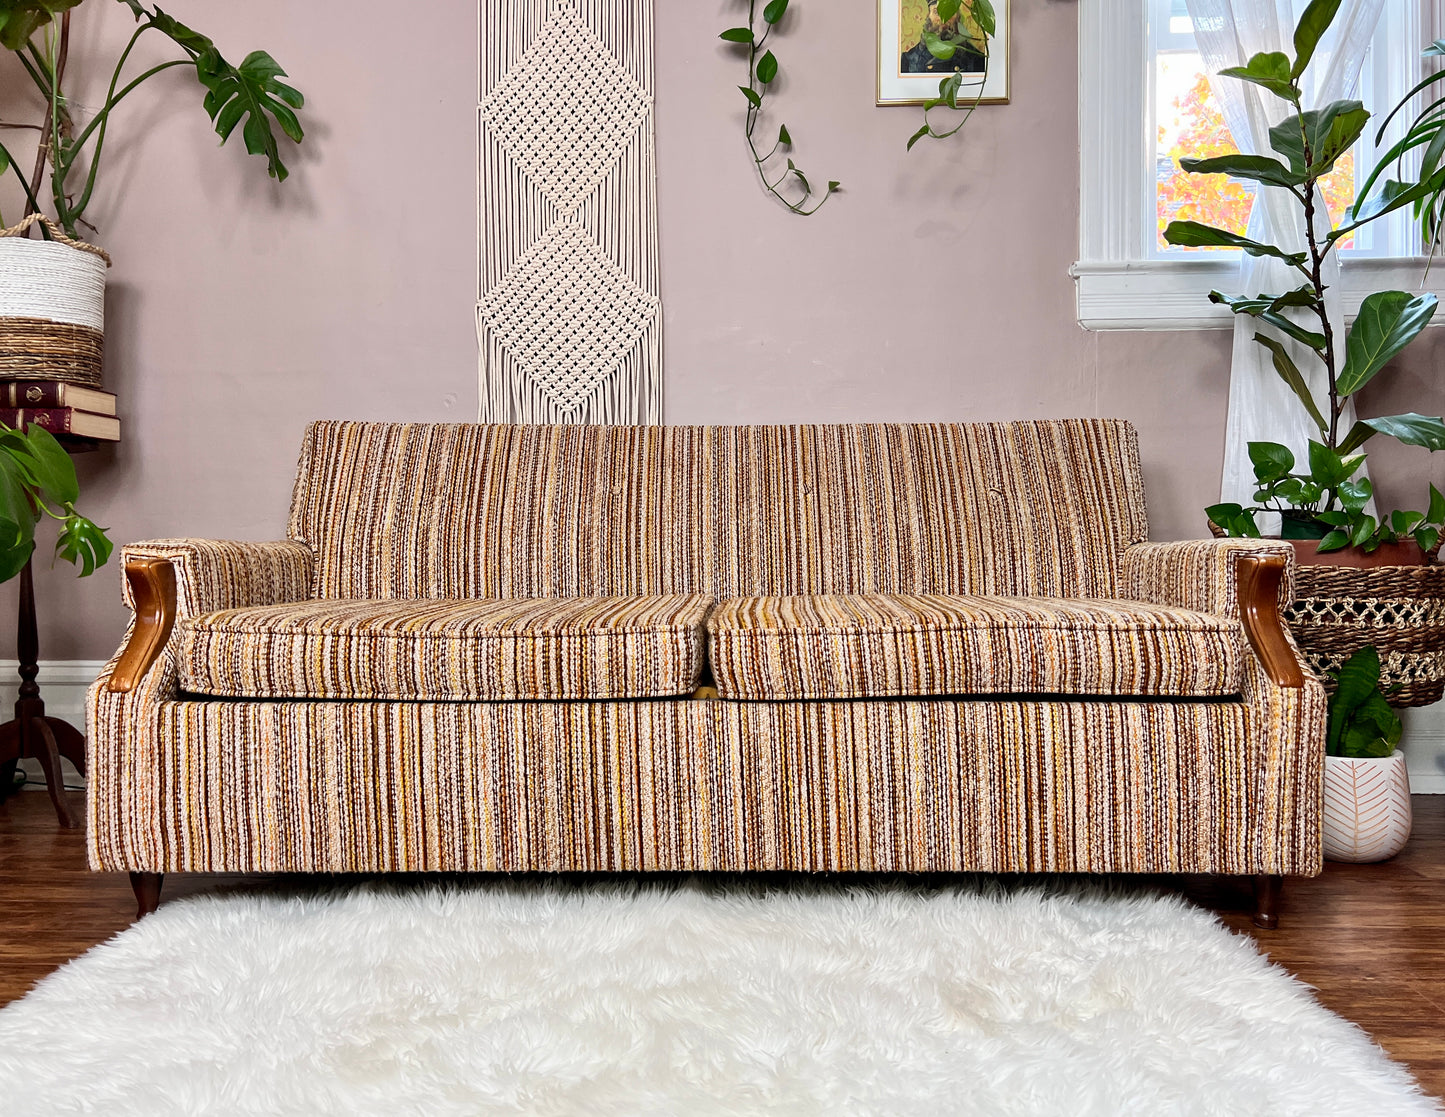 The Quincy Sofa